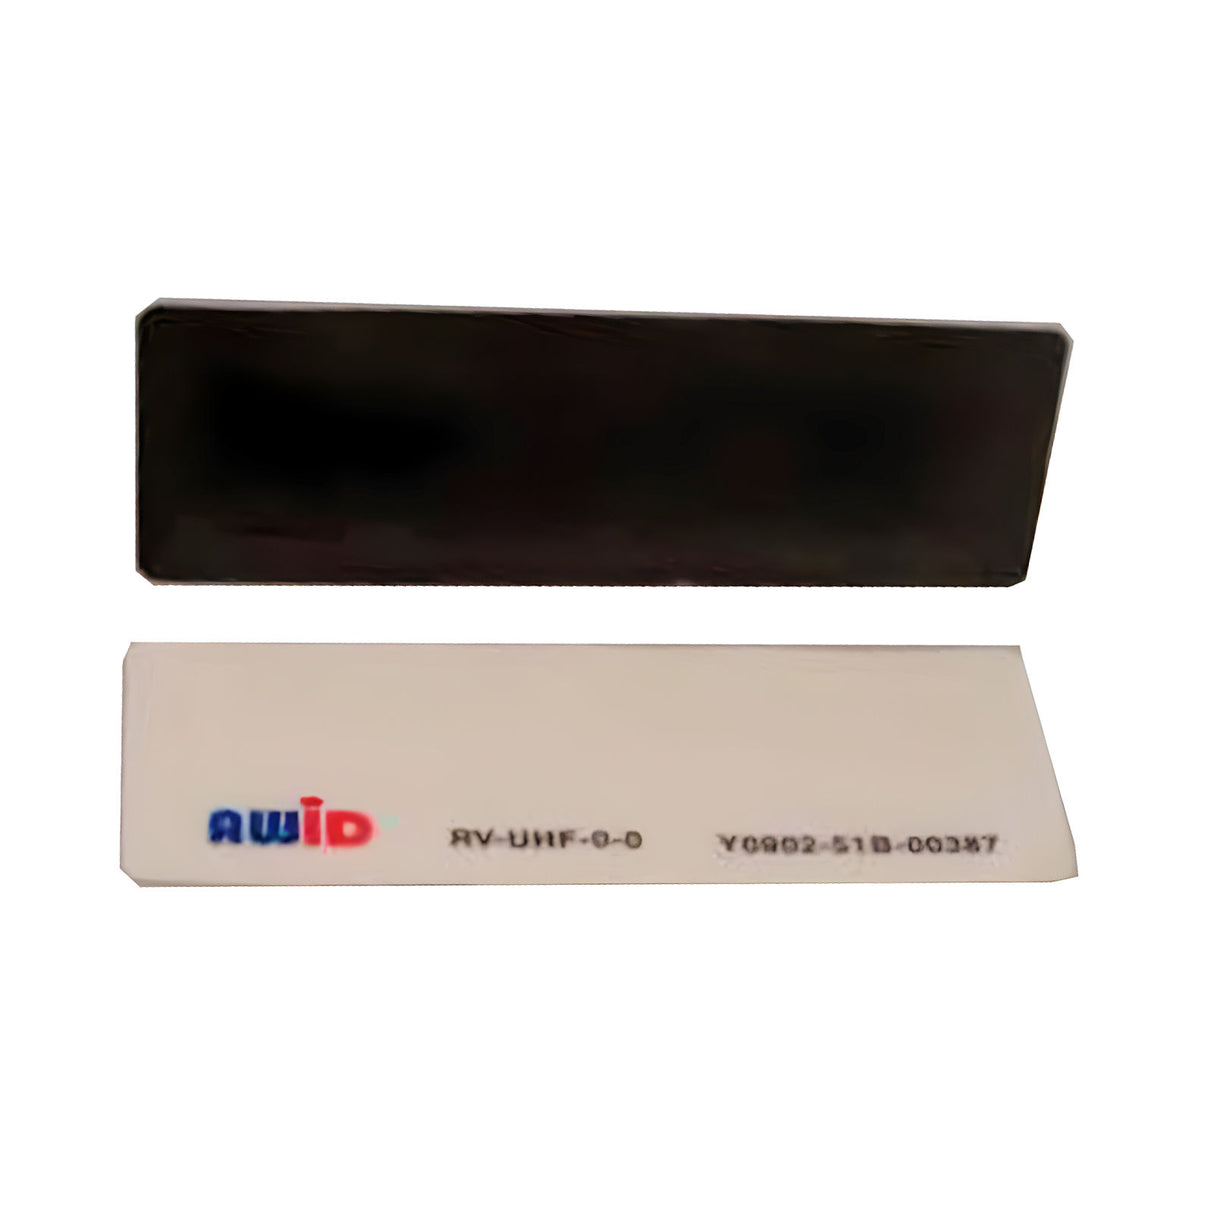 Etiquetas para espejo retrovisor Awid RV-UHF-0-0 (cantidad 50)